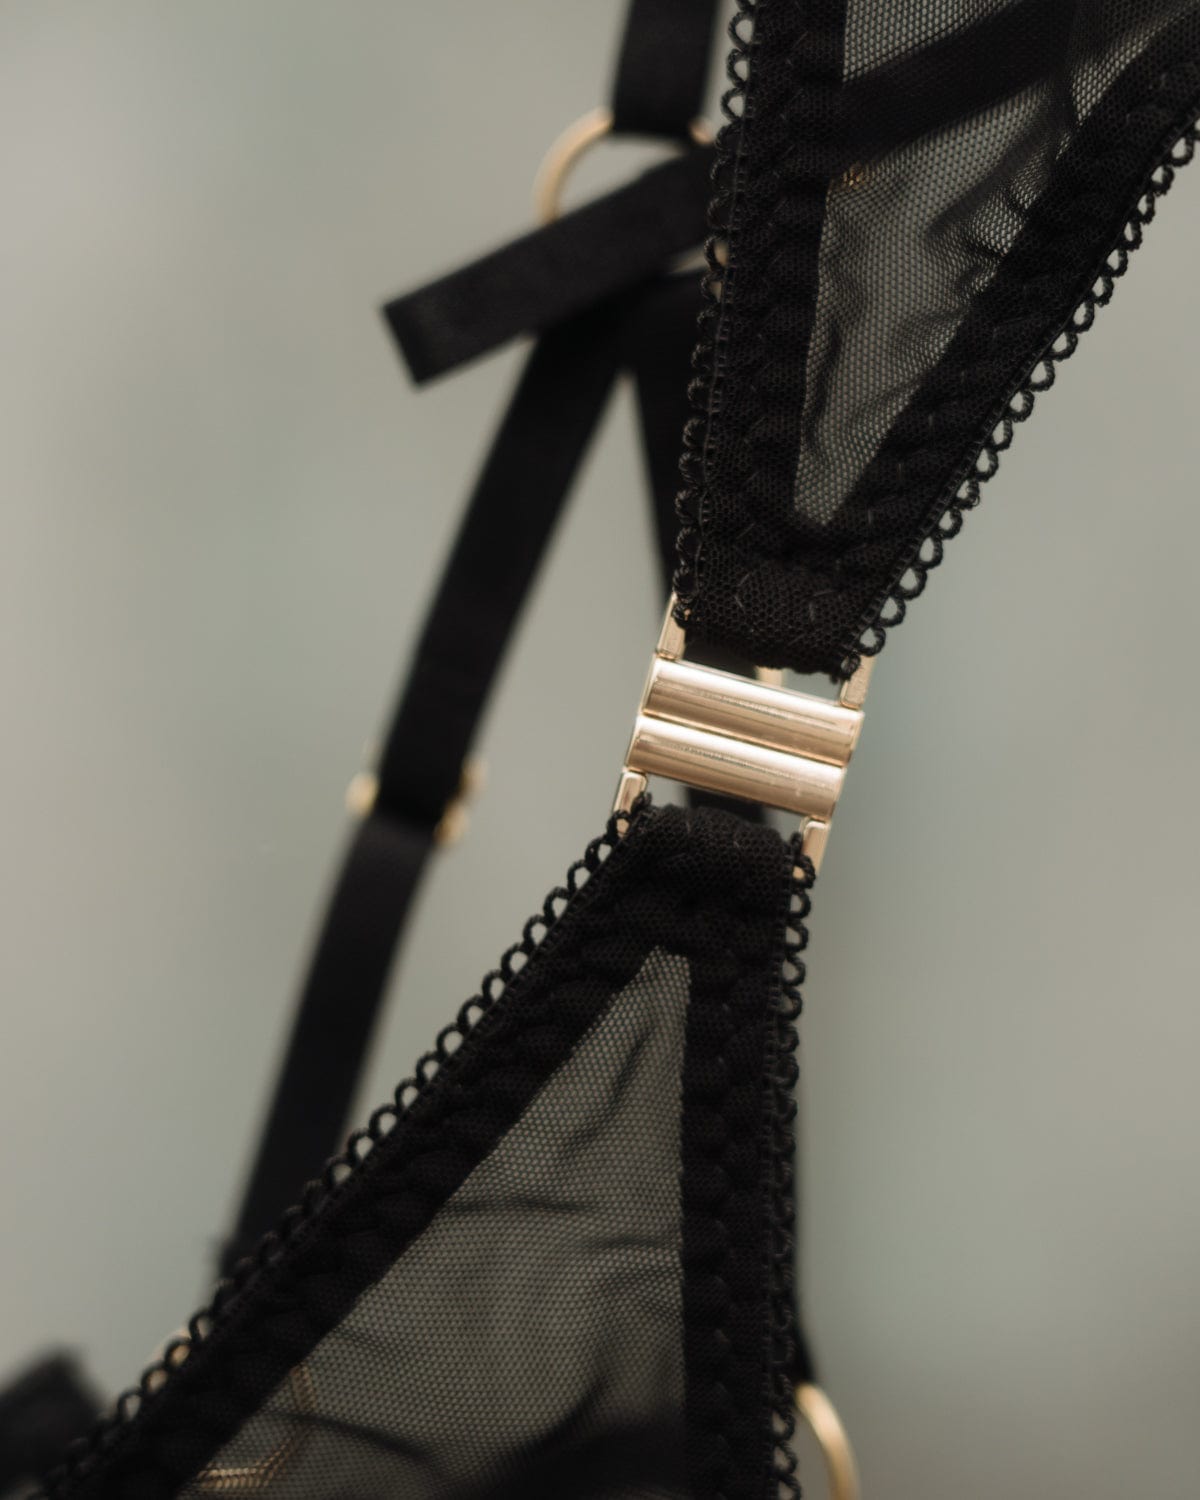 Vivi Leigh London lingerie Black Mesh Suspenders sexy harness luxury lingerie Mesh Black Suspenders uk sustainable brand